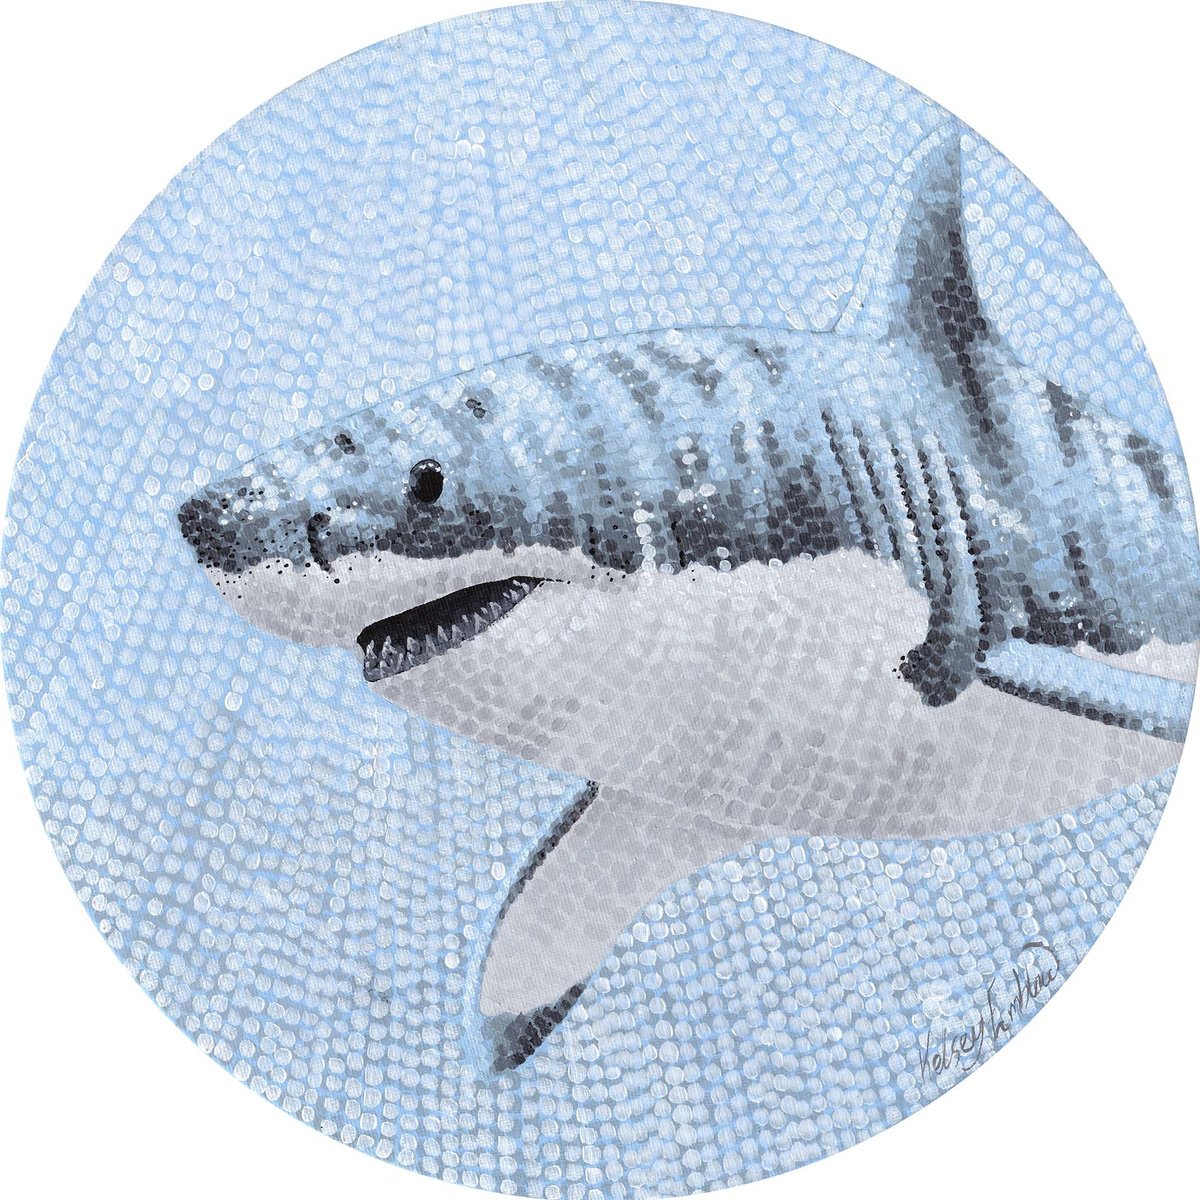 Great White Shark by Kelsey Emblow